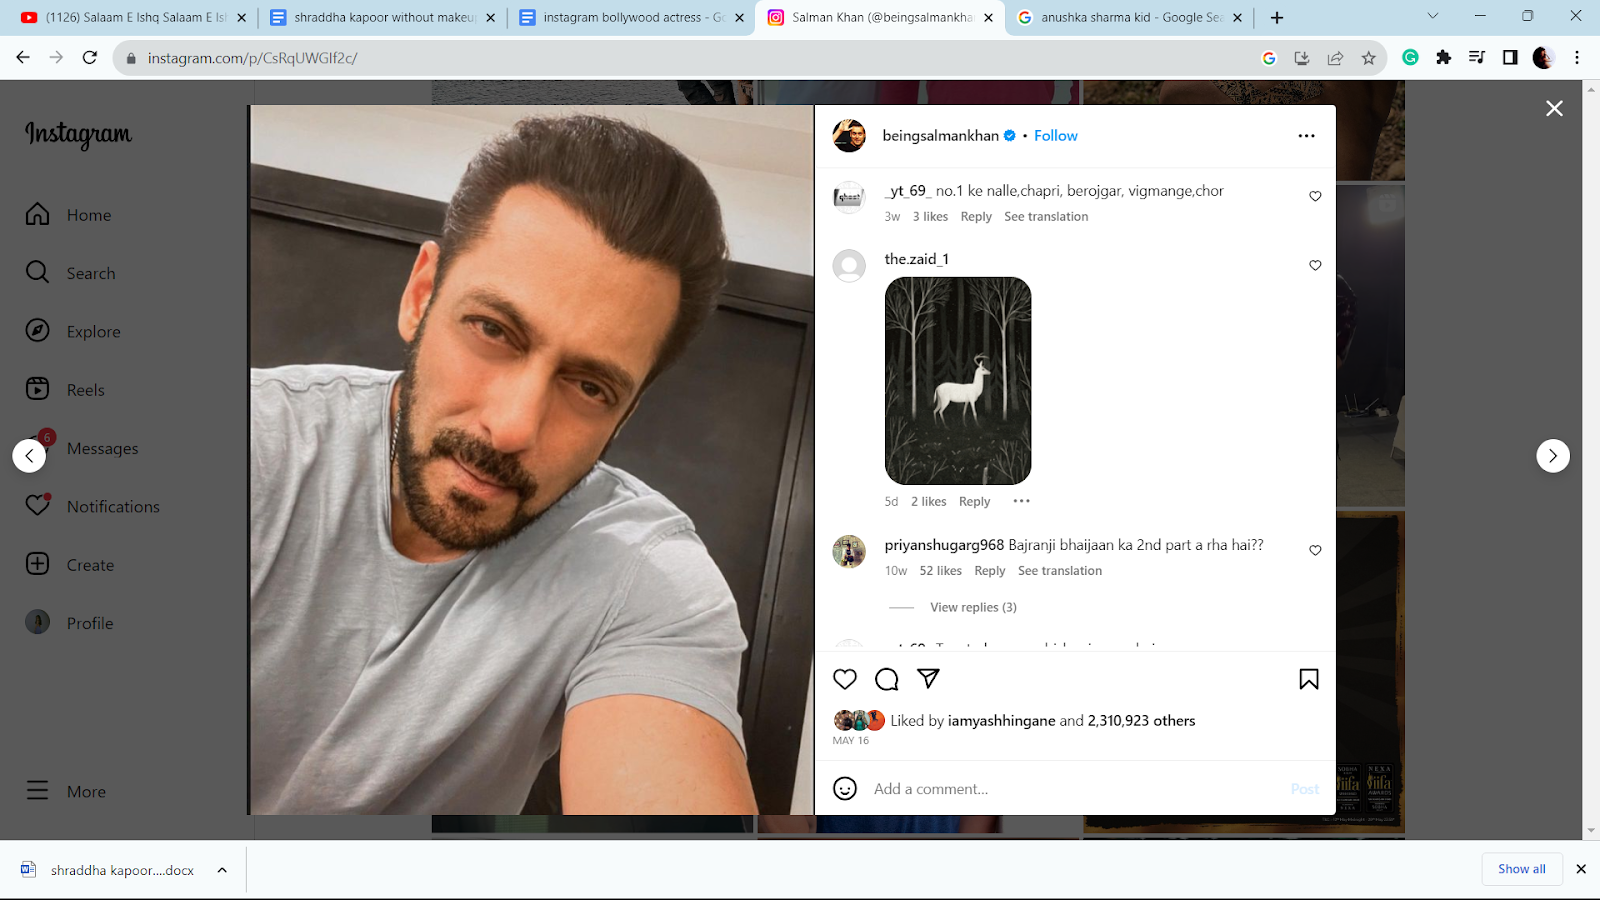 Actor Salman Khan on Instagram